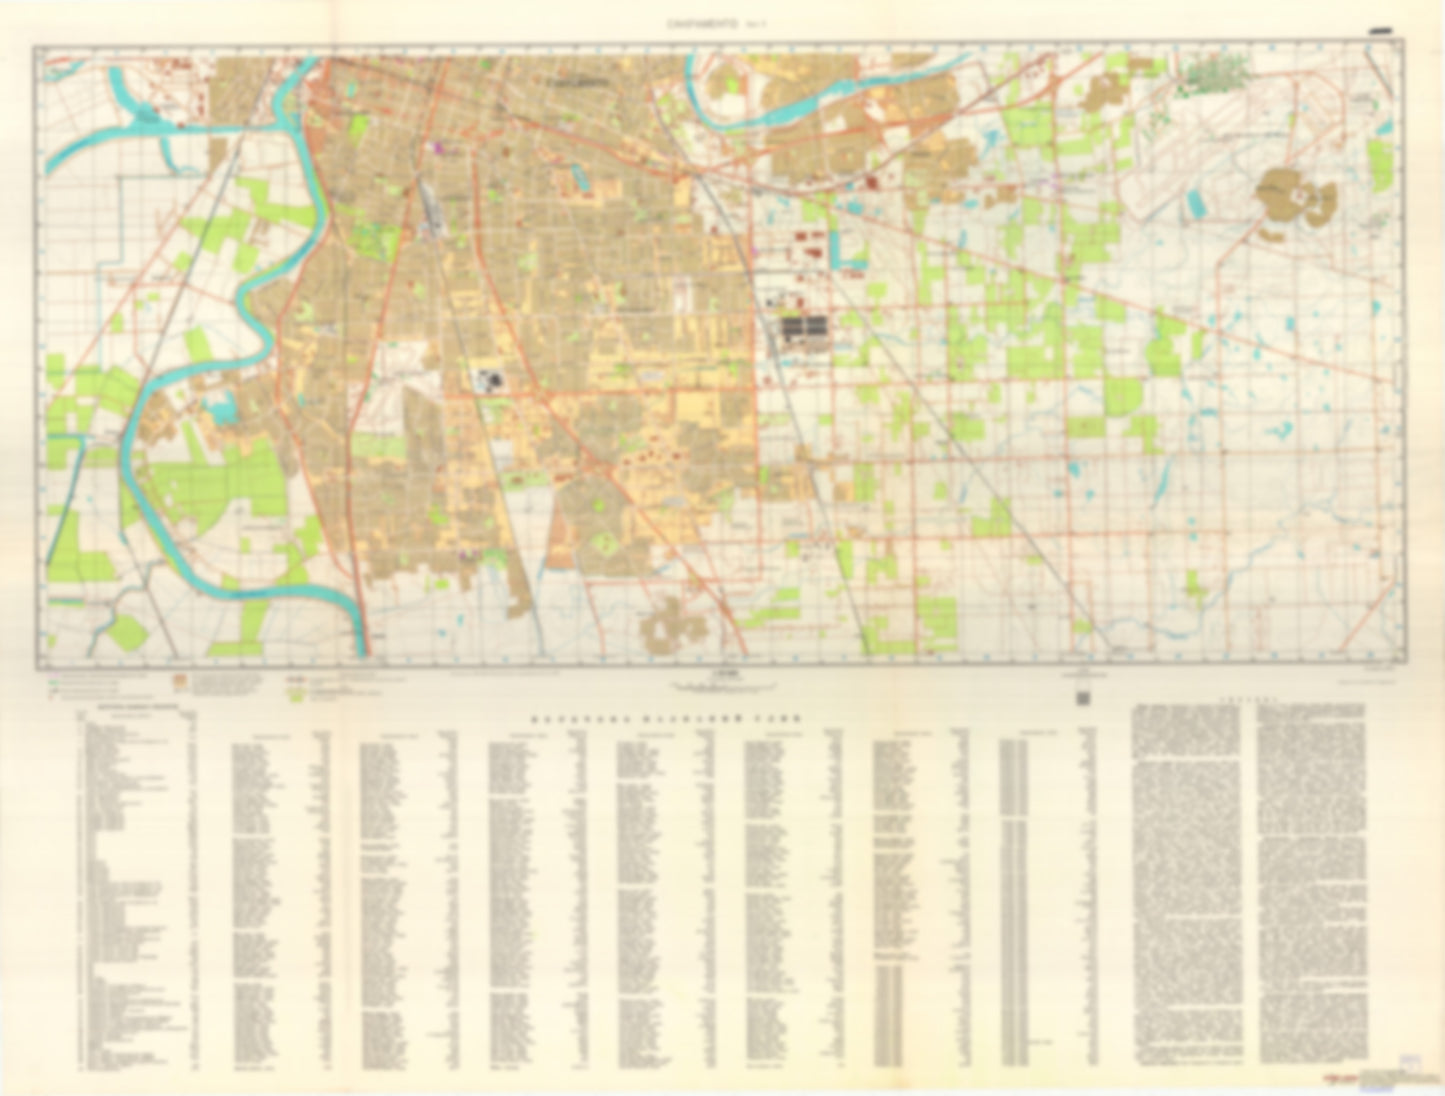 Sacramento, CA 2 (USA) - Soviet Military City Plans